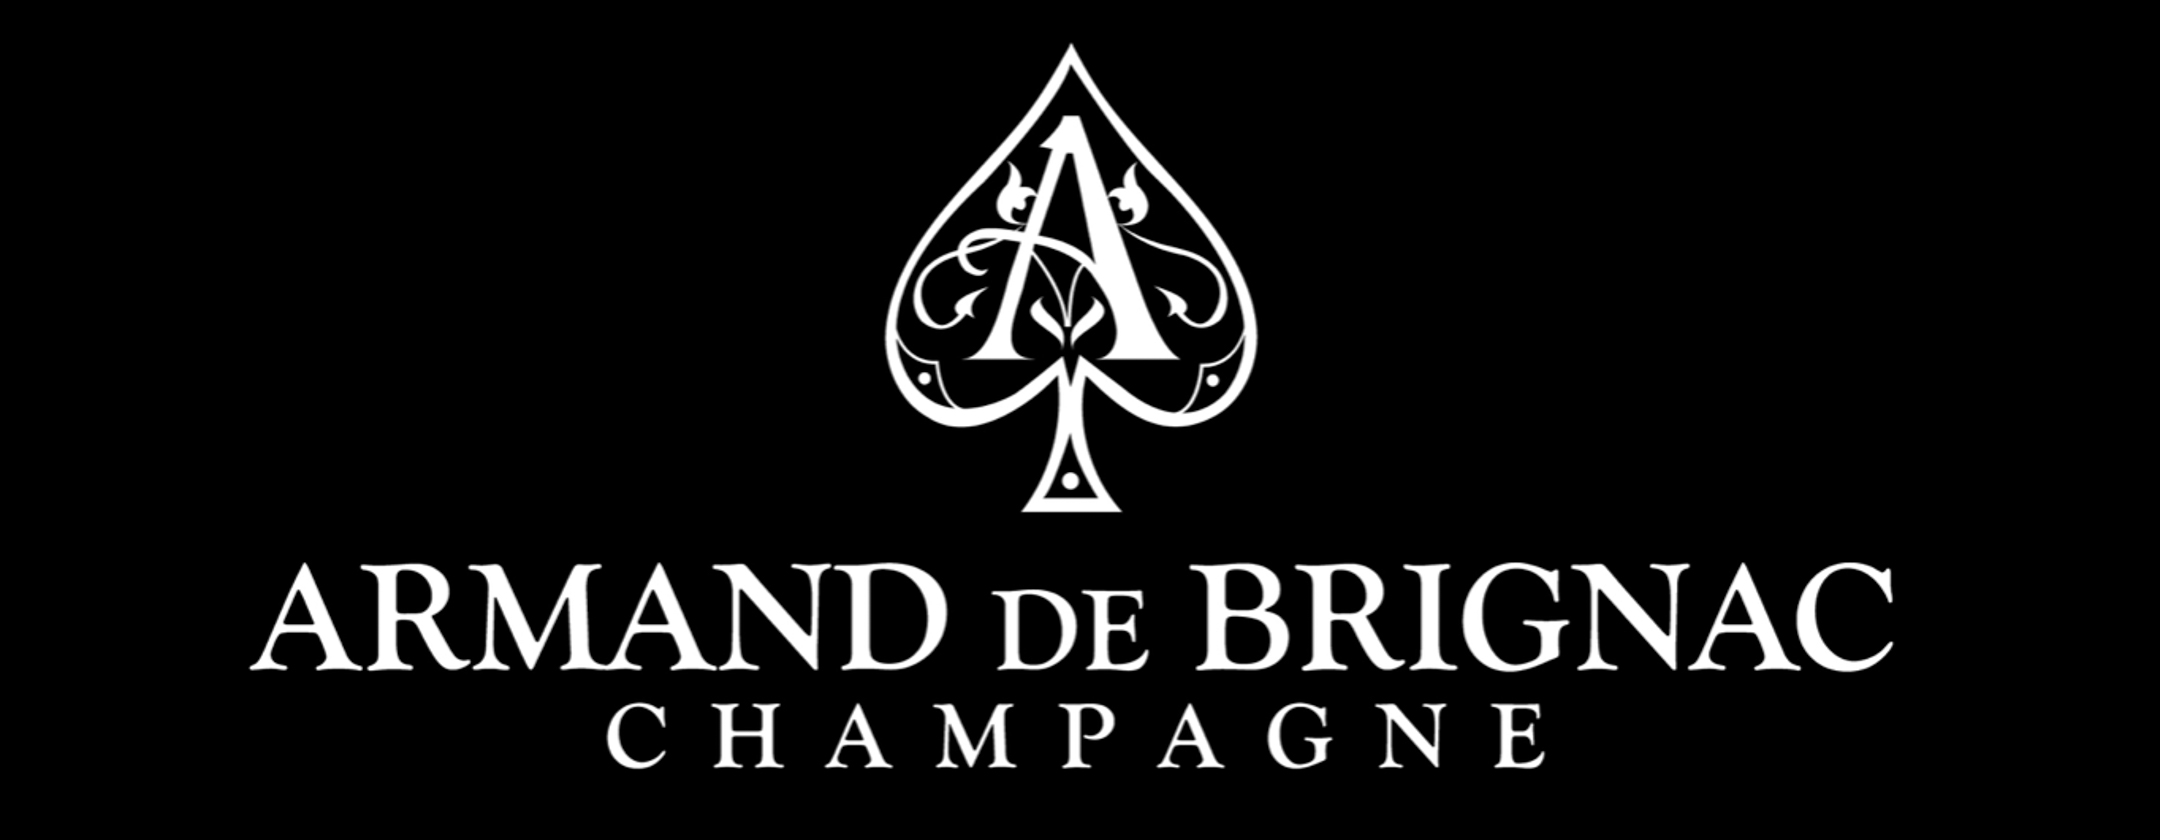 Armand de Brignac Champagne logo against black background. 